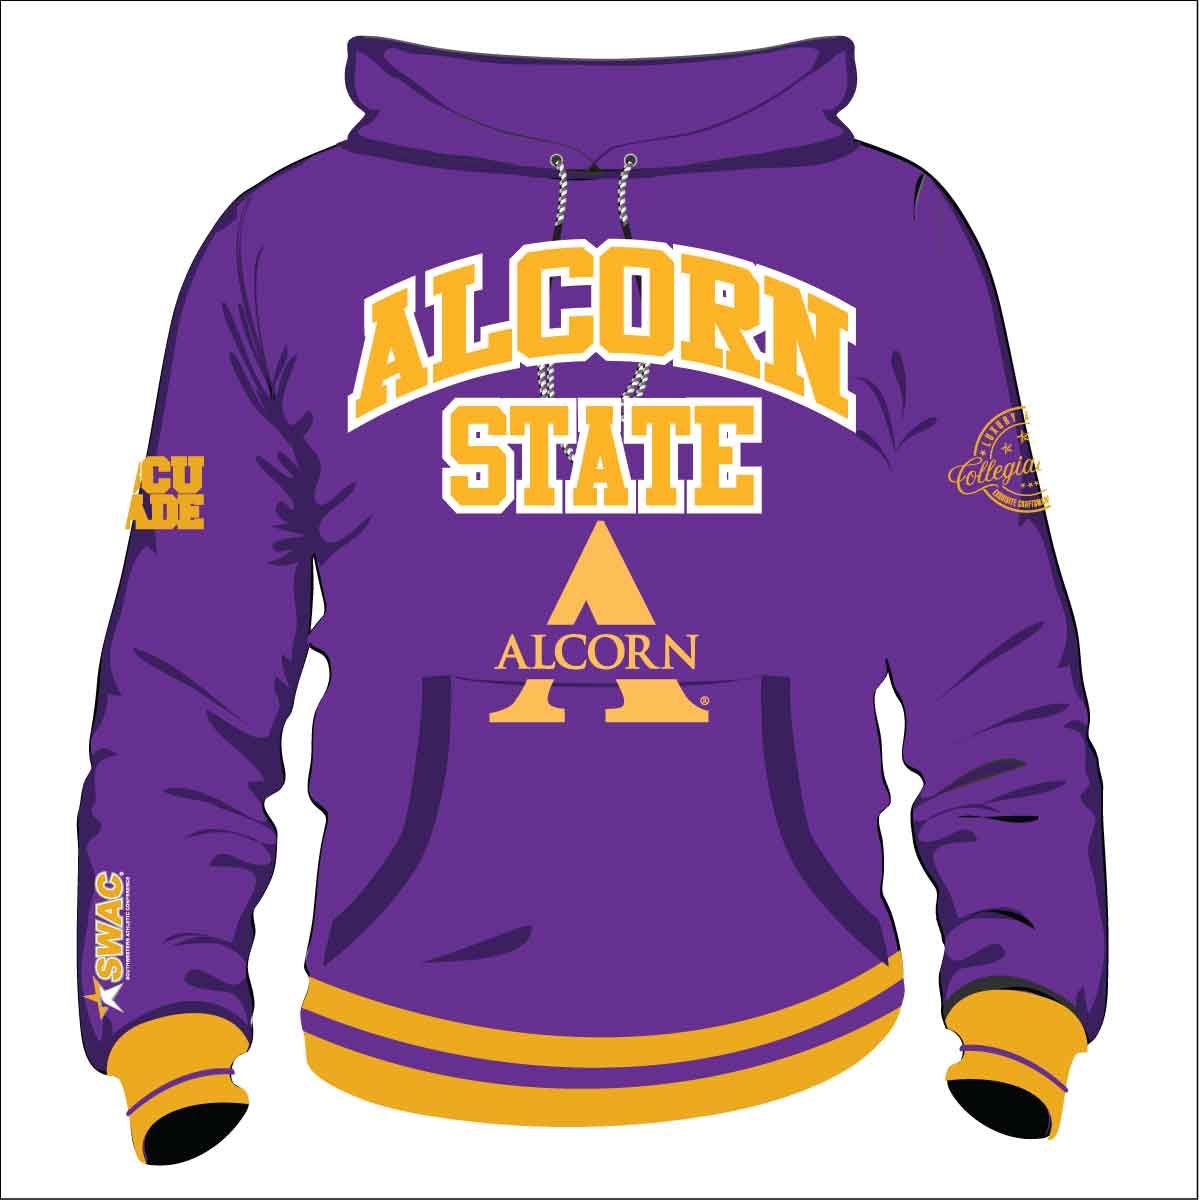 Alcorn State collegiateluxe